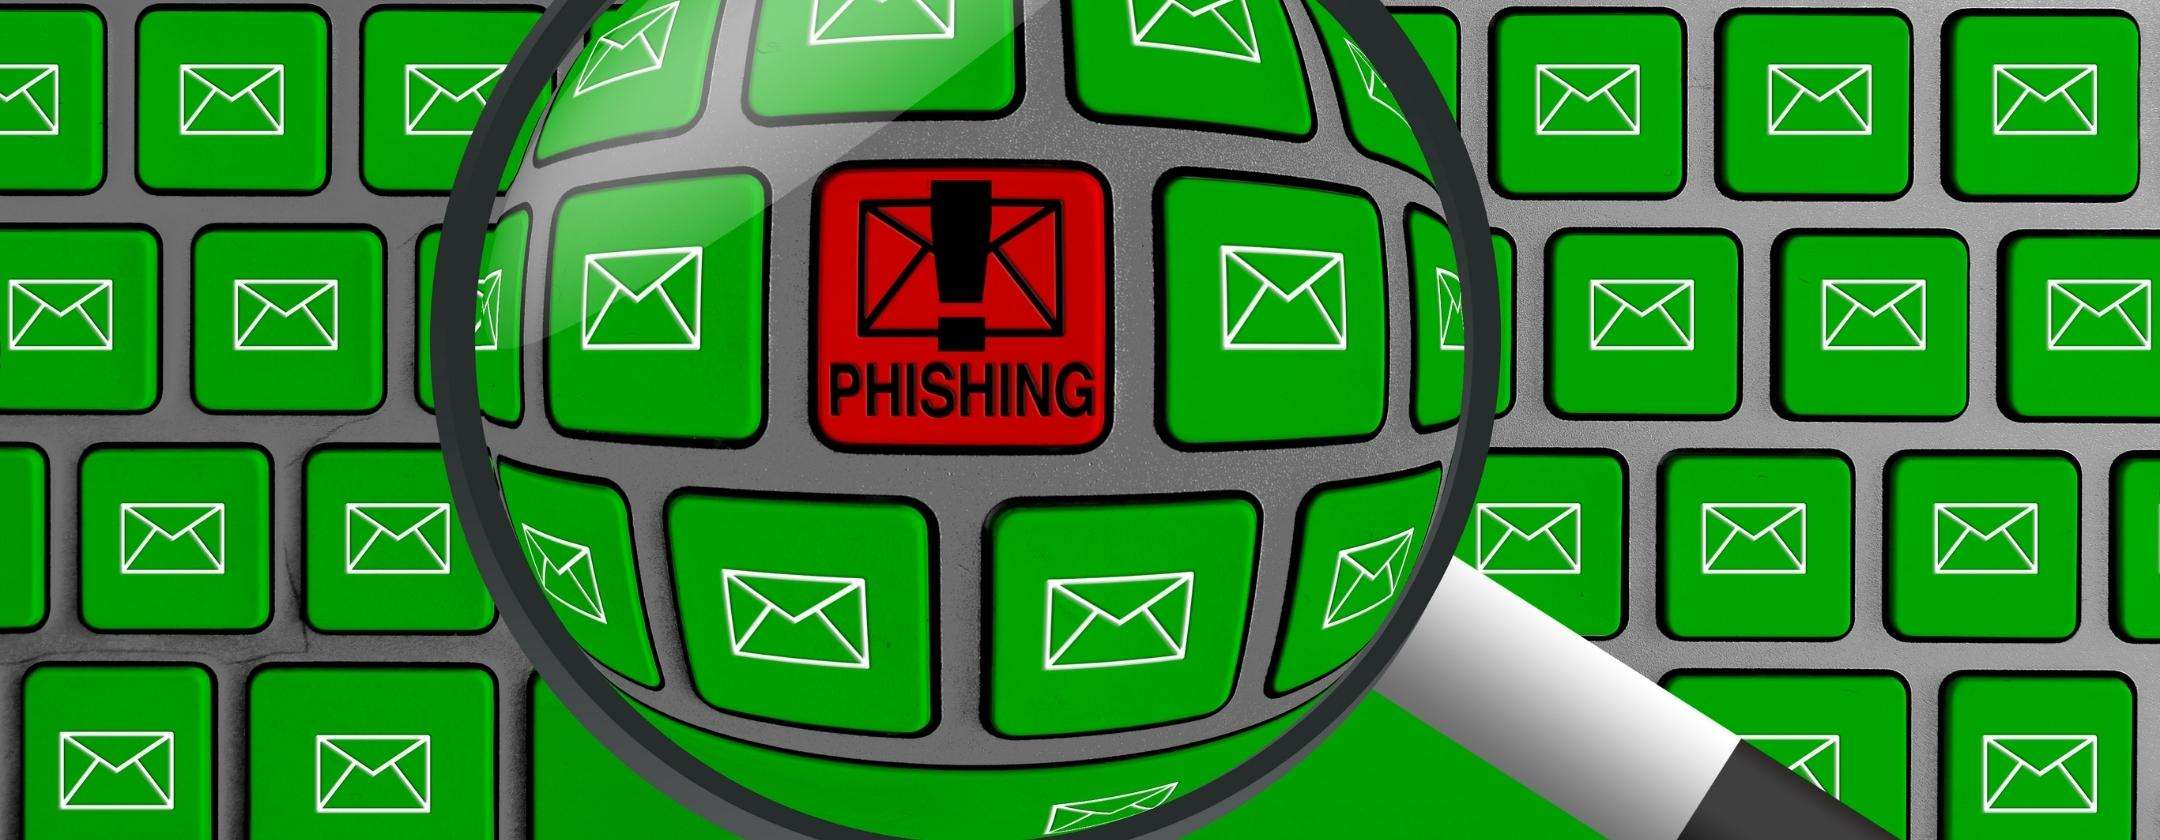 Truffe INPS: attenzione alle nuove email di phishing